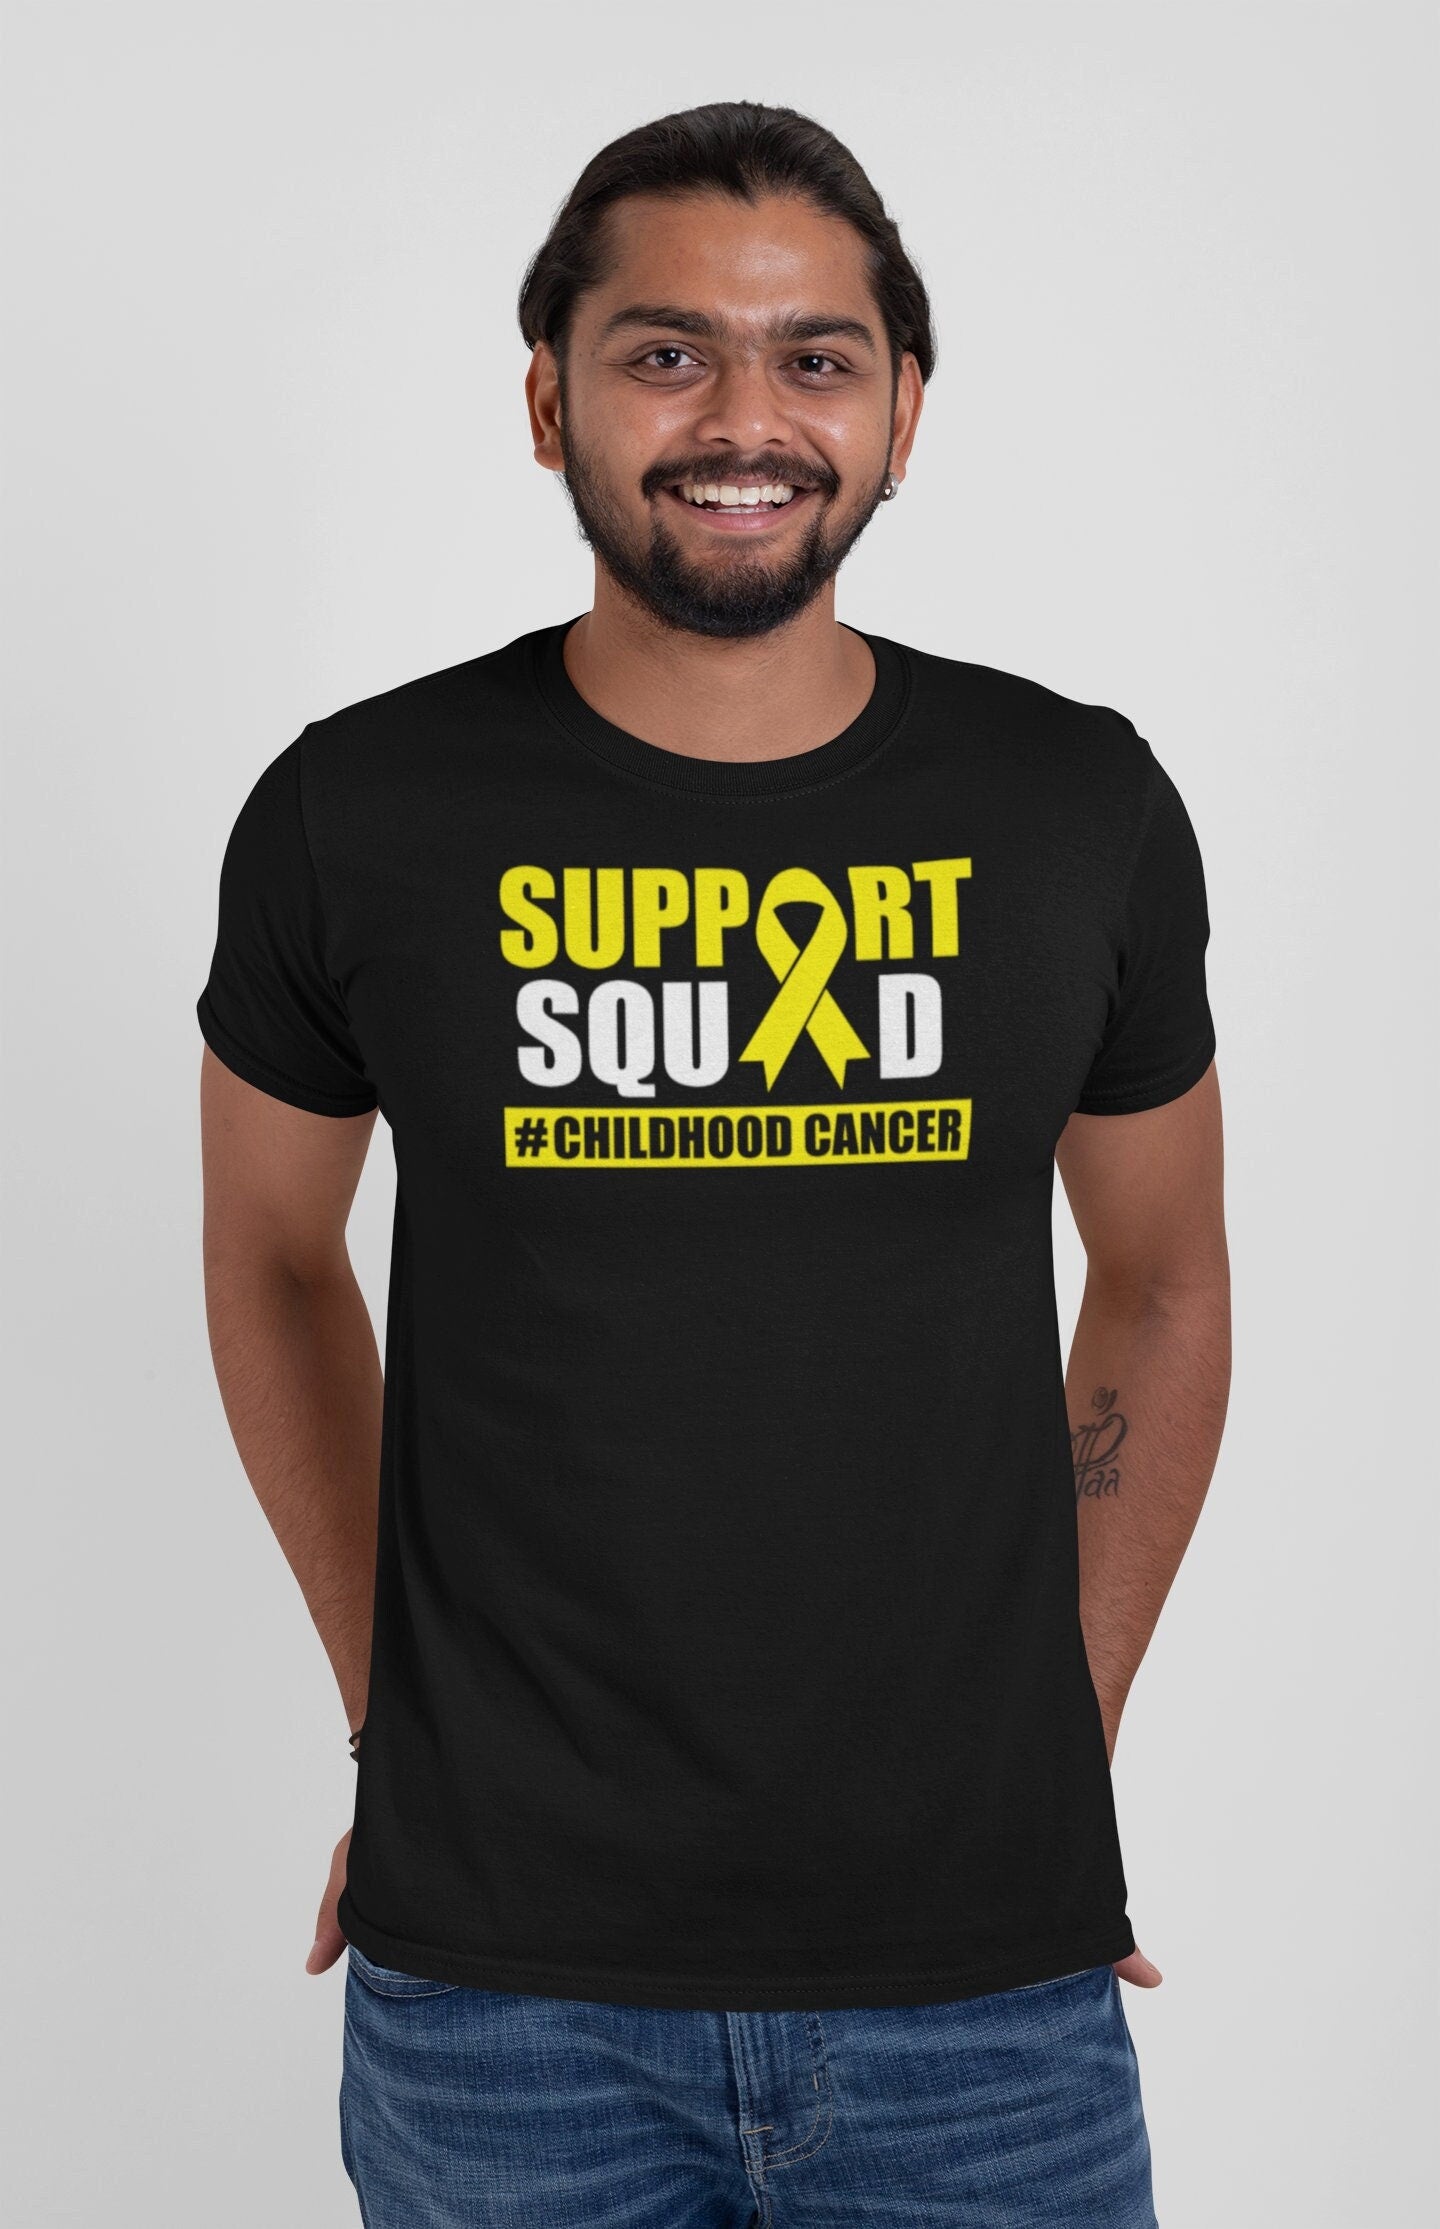 Childhood Cancer Support Squad Shirt, Childhood Cancer Awareness Shirt, Gold Ribbon Shirt